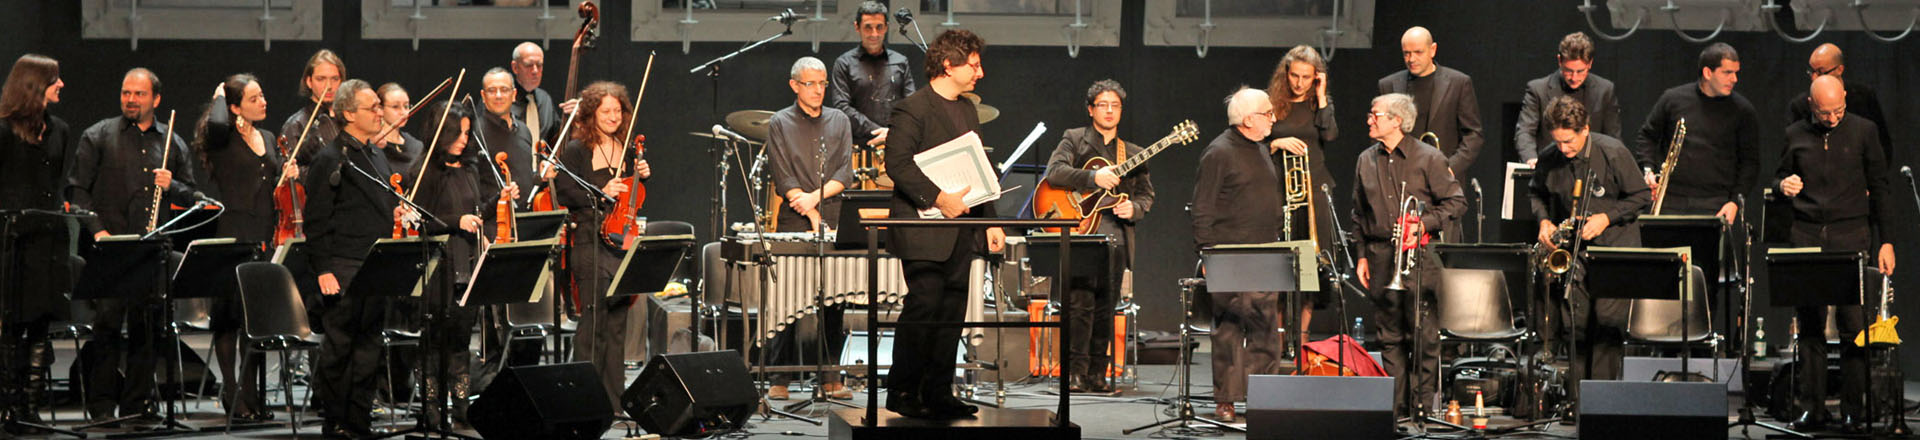 28 Gennaio h.12,30, Auditorium Parco della Musica- VIDEOGAMELAB-La Jazz Campus Orchestra arrangia la musica dei suoi videogames!